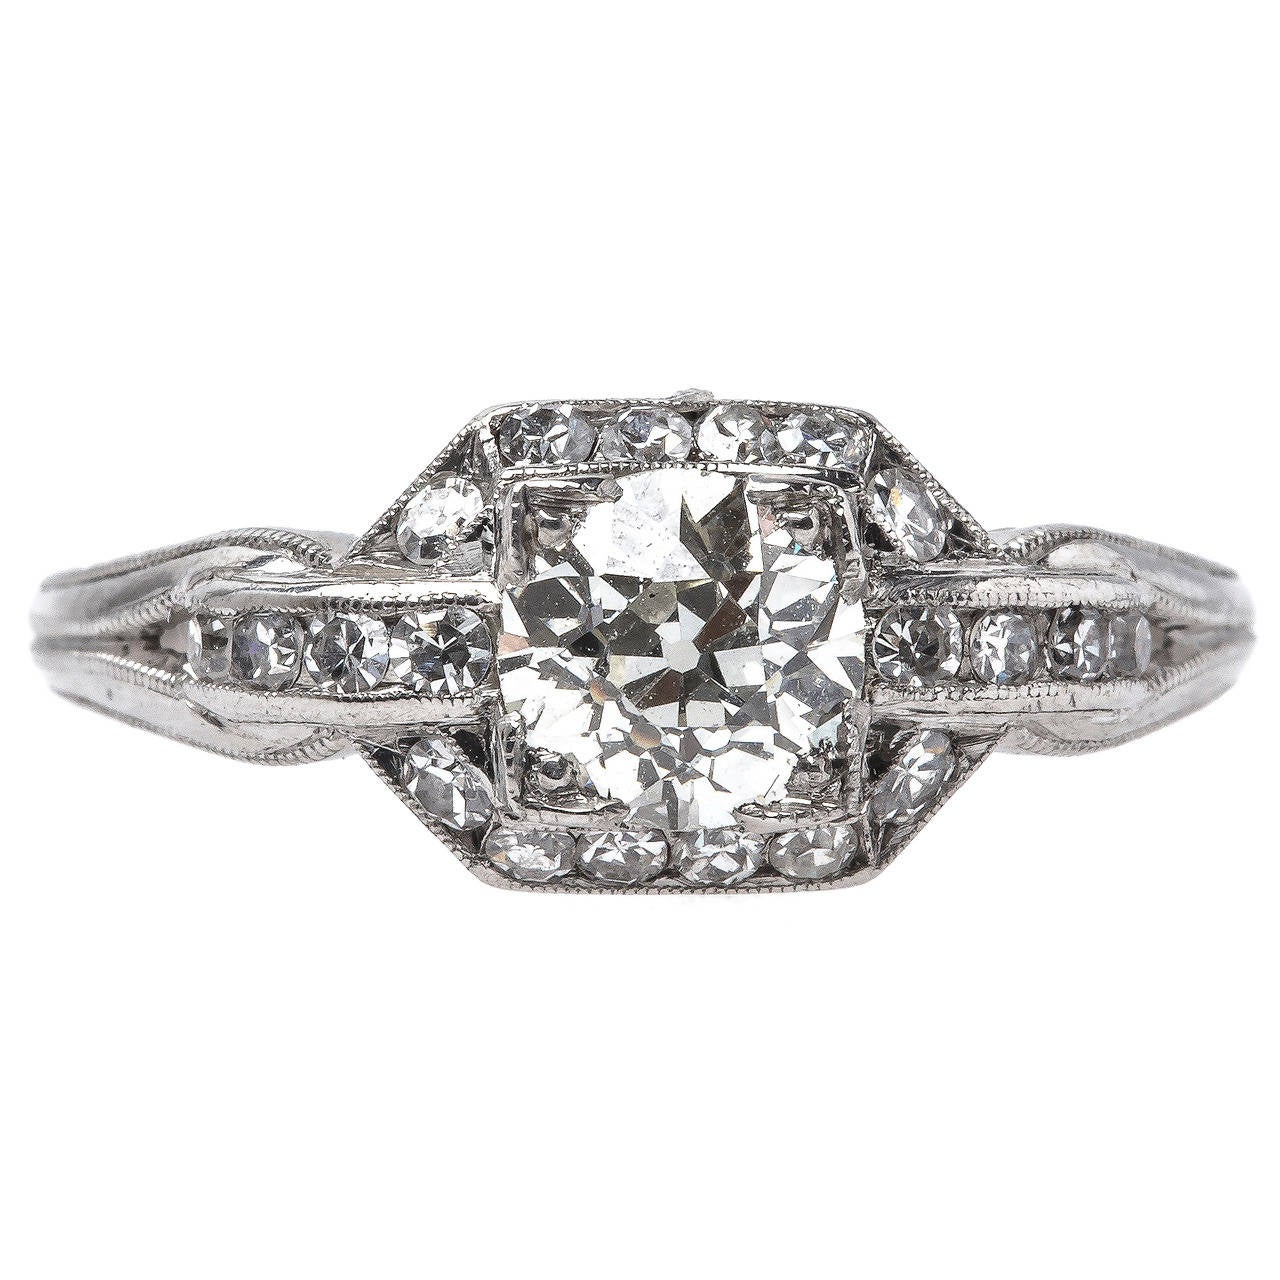 Art Deco Era Platinum Ring with Old European Cut Diamond Center and Diamond Halo